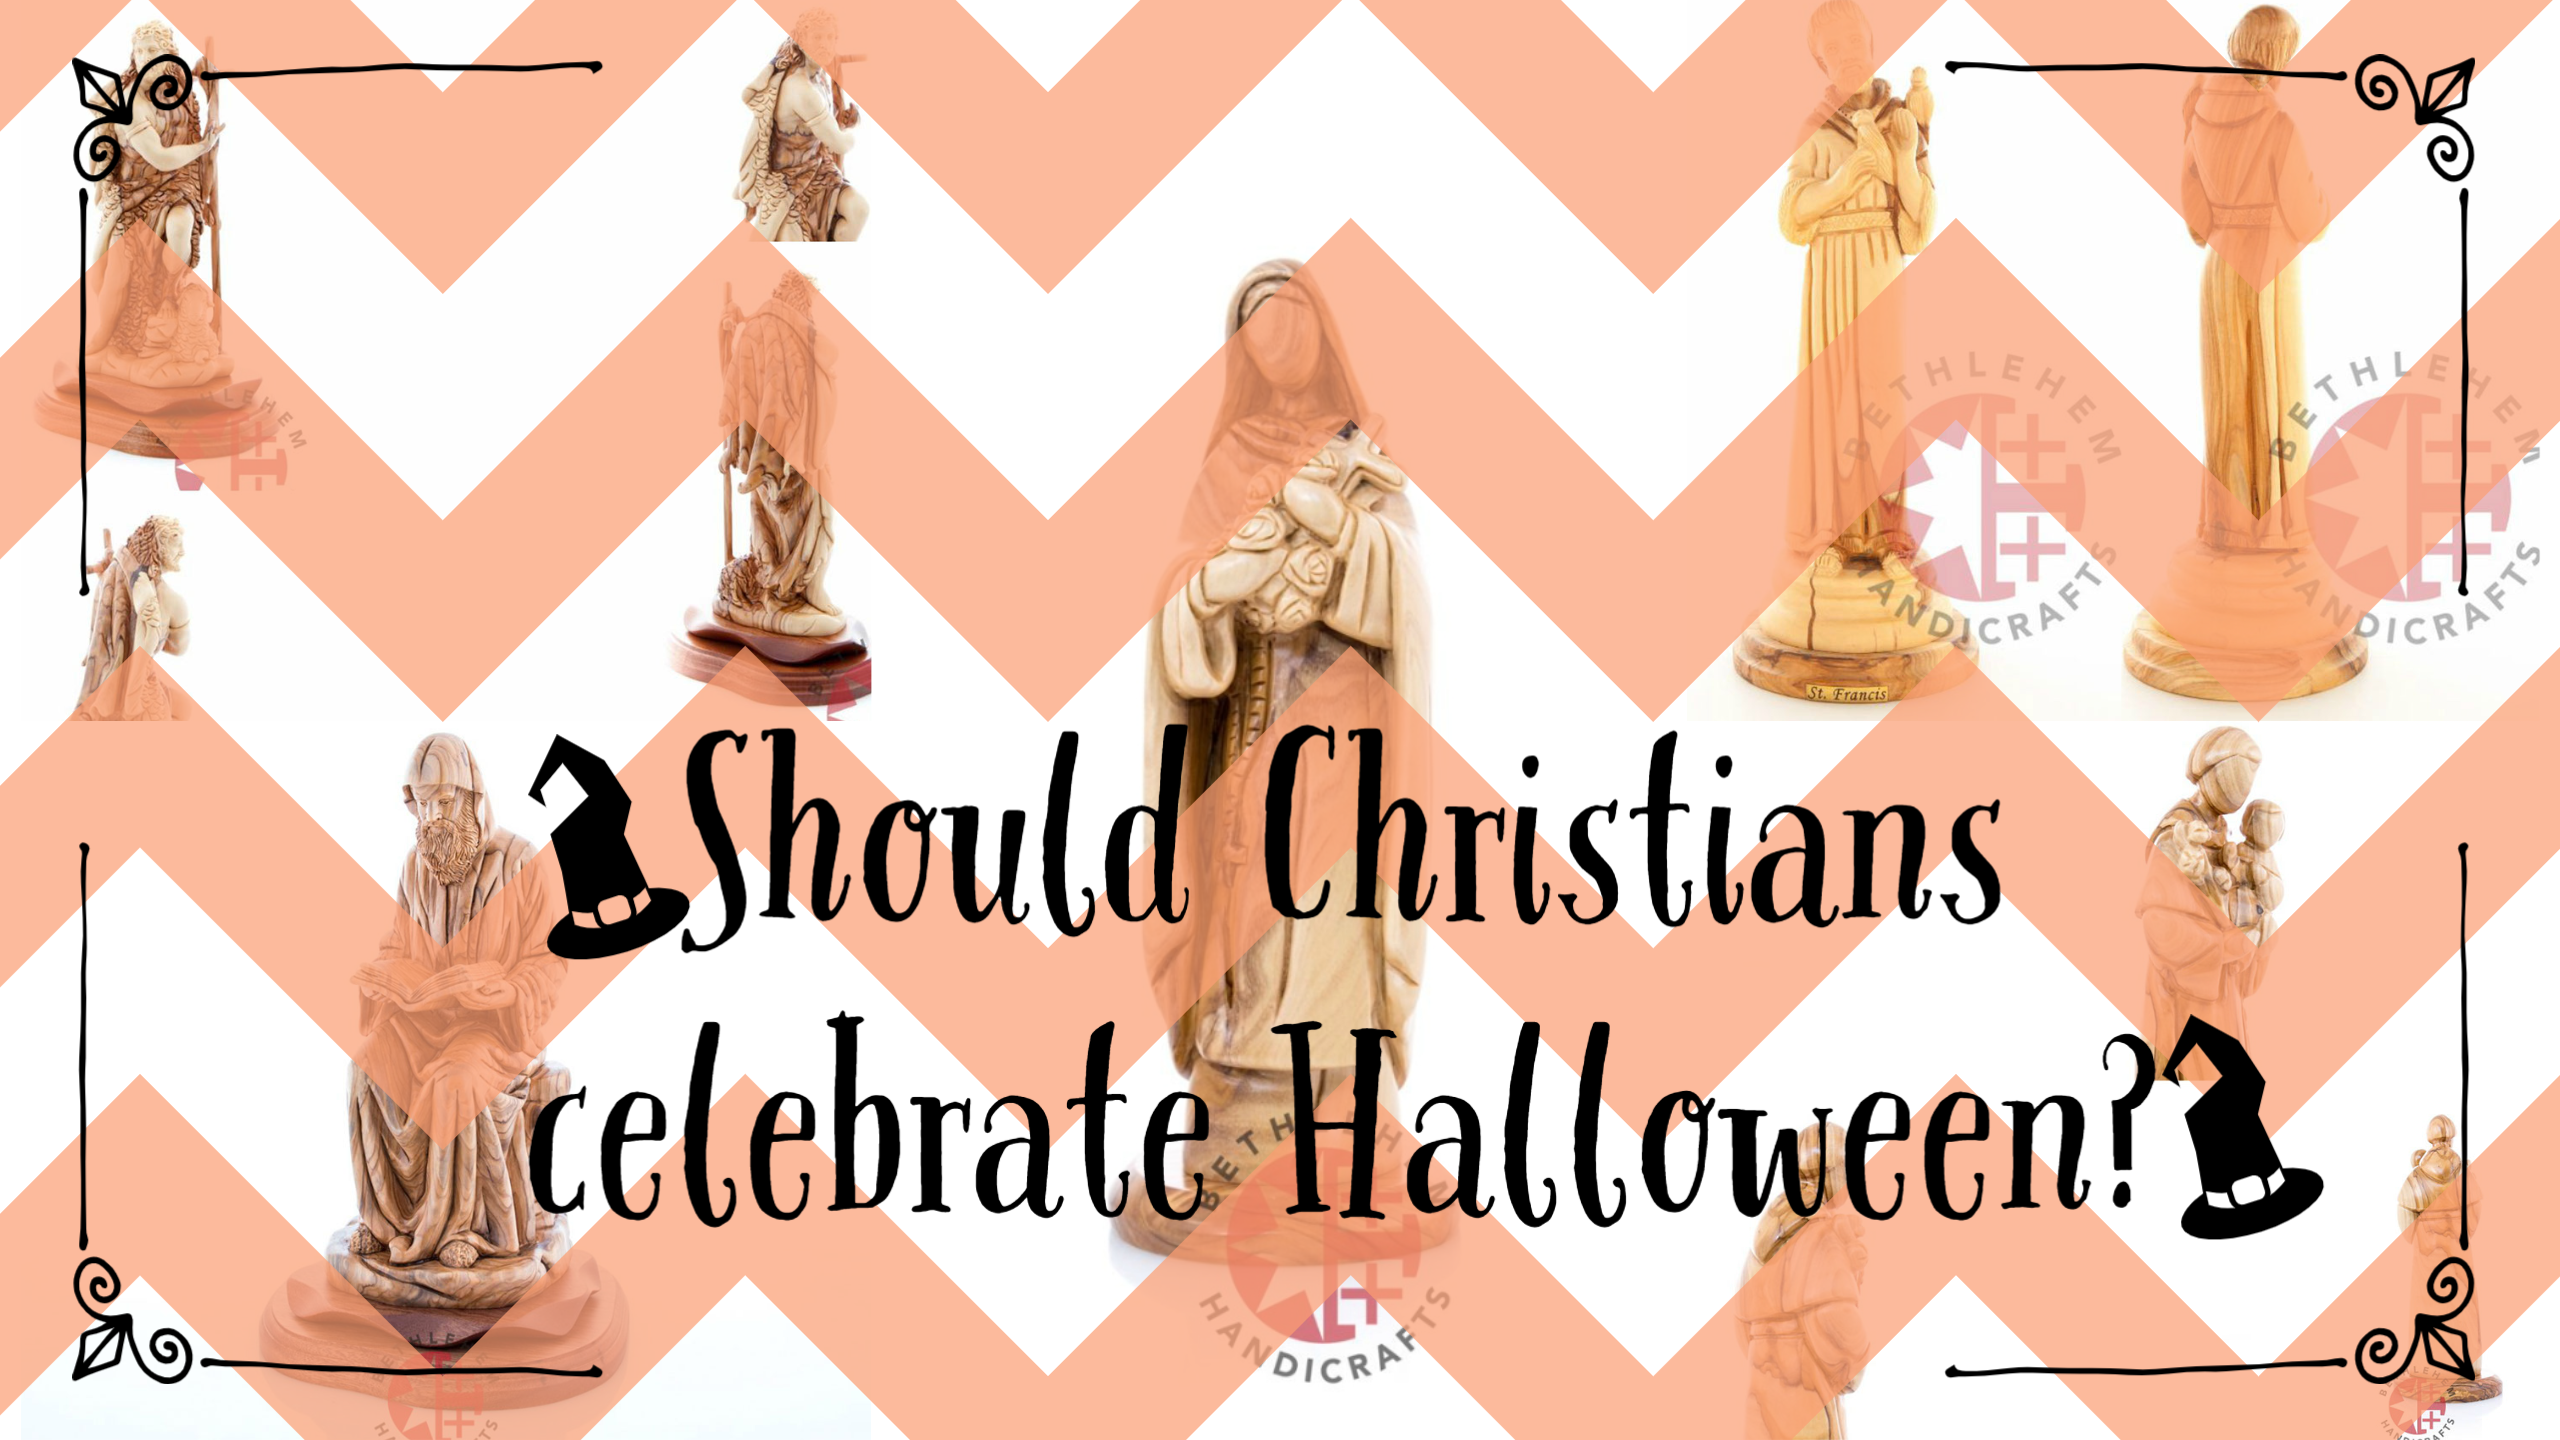 Should Christians celebrate Halloween?